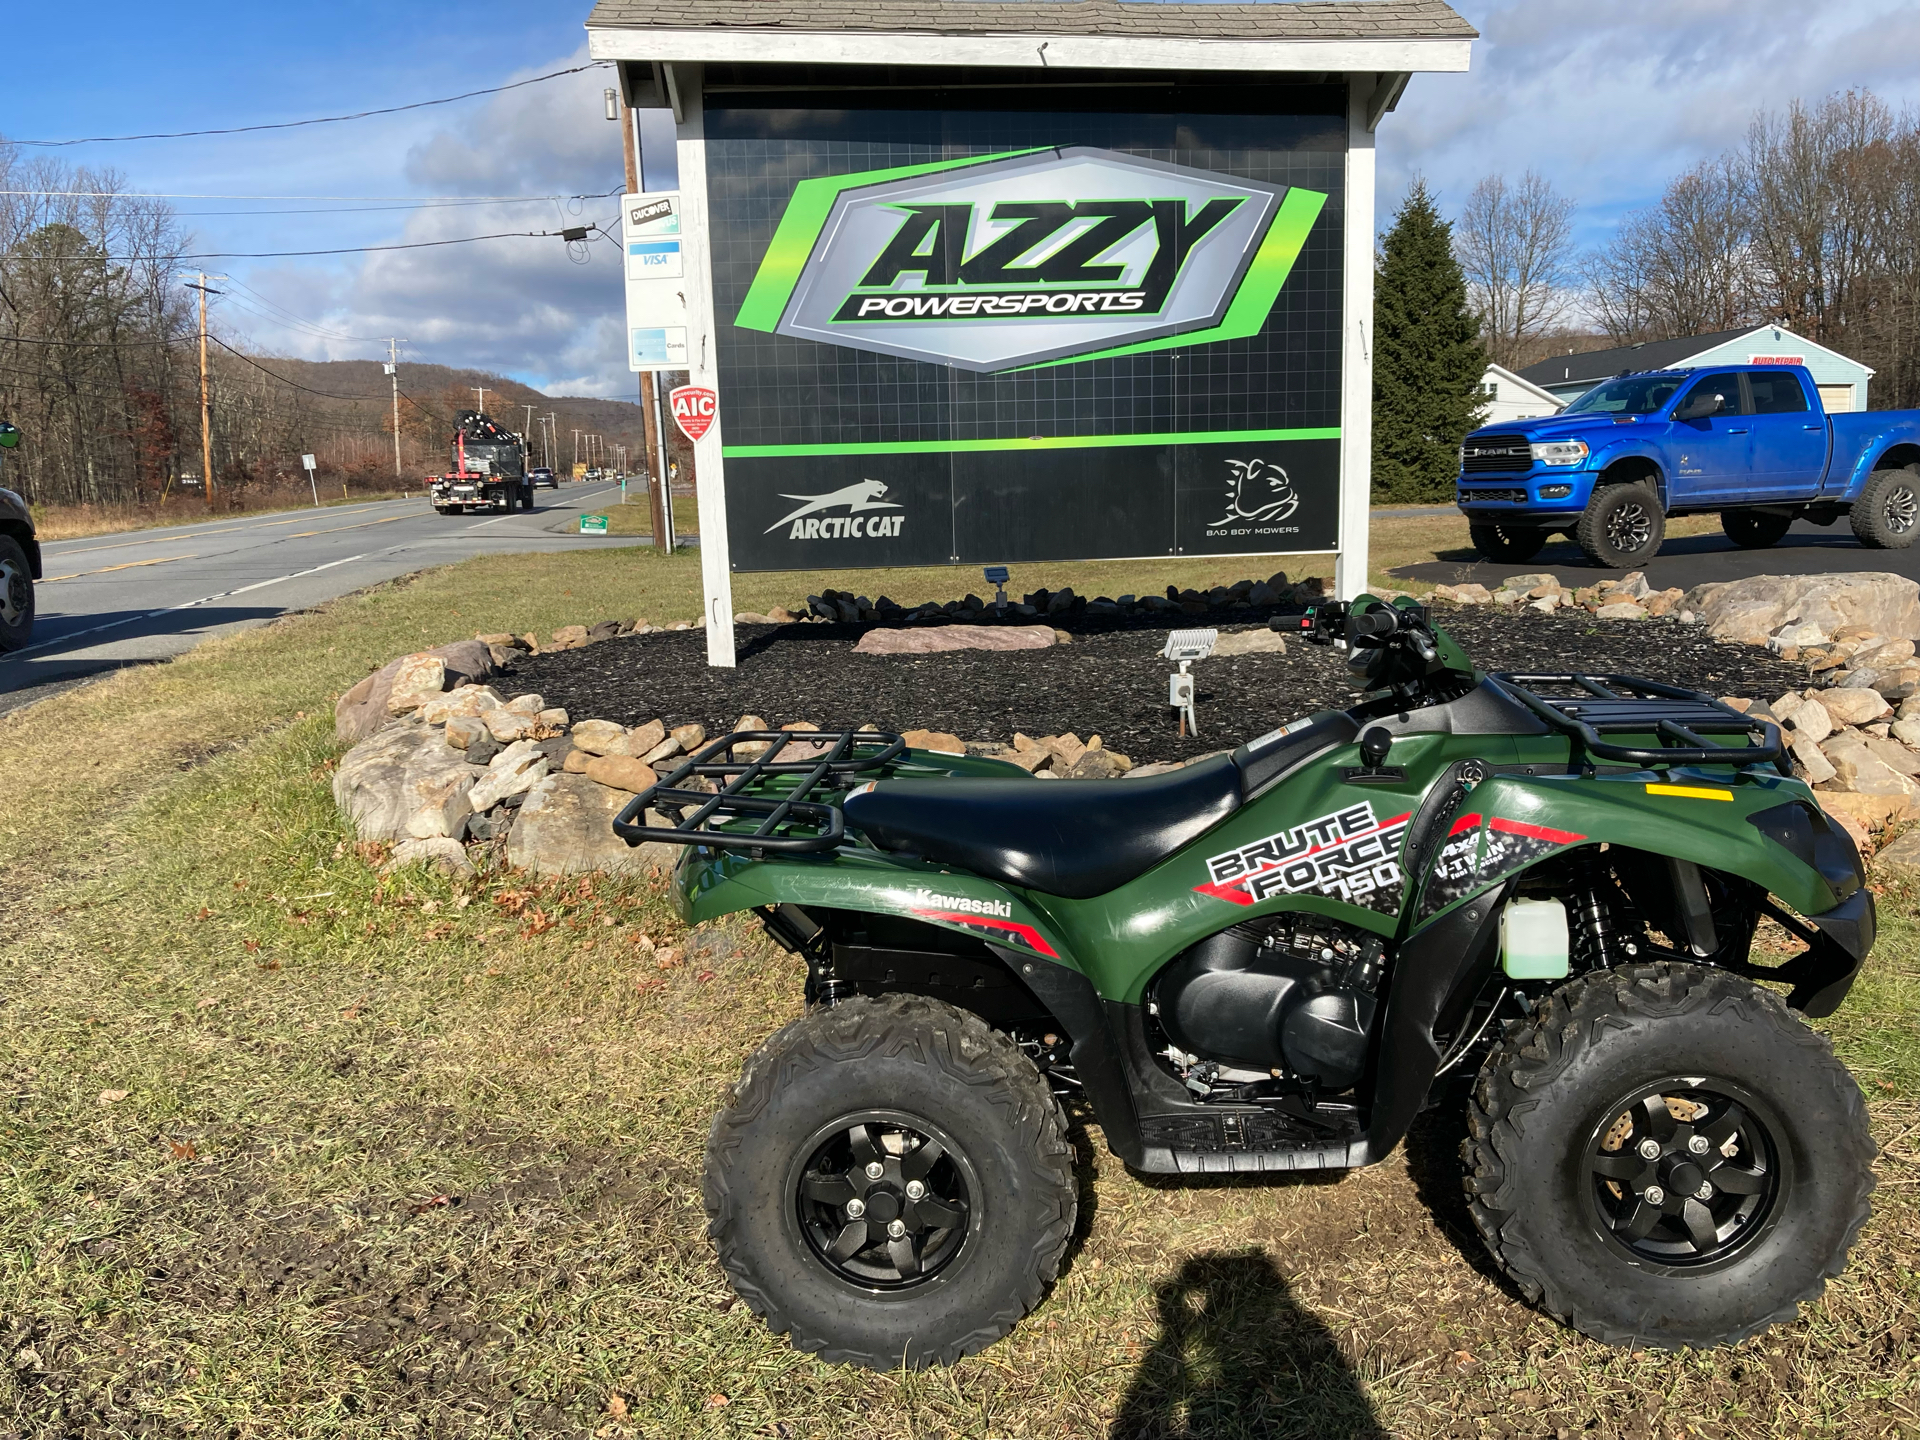 2019 Kawasaki Brute Force 750 4x4i in Effort, Pennsylvania - Photo 1